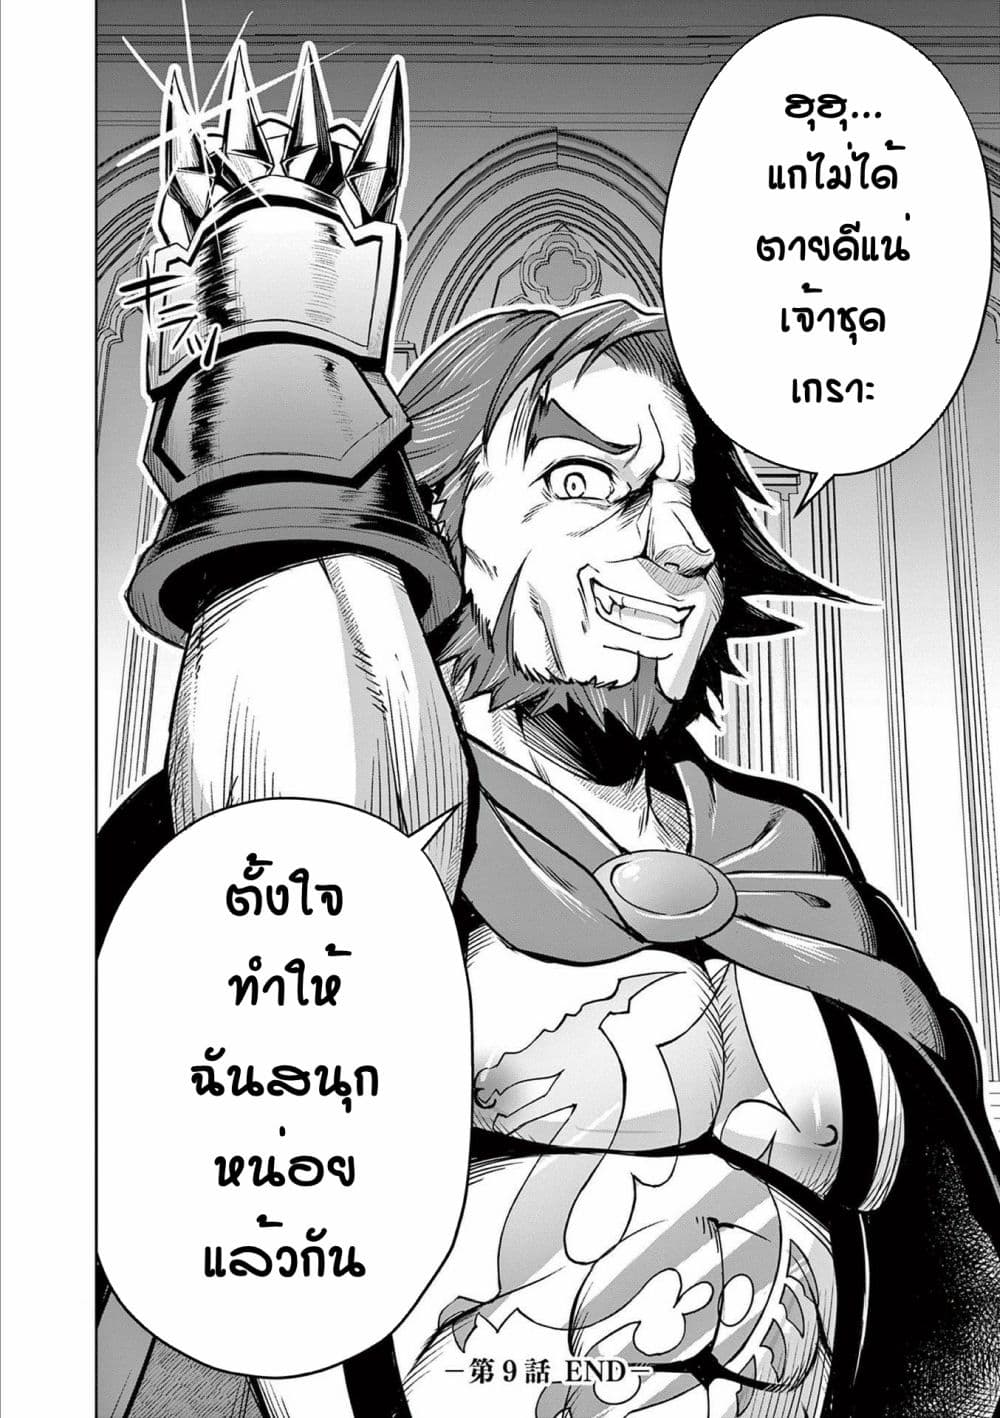 Moto Shogun no Undead Knight 9 (21)